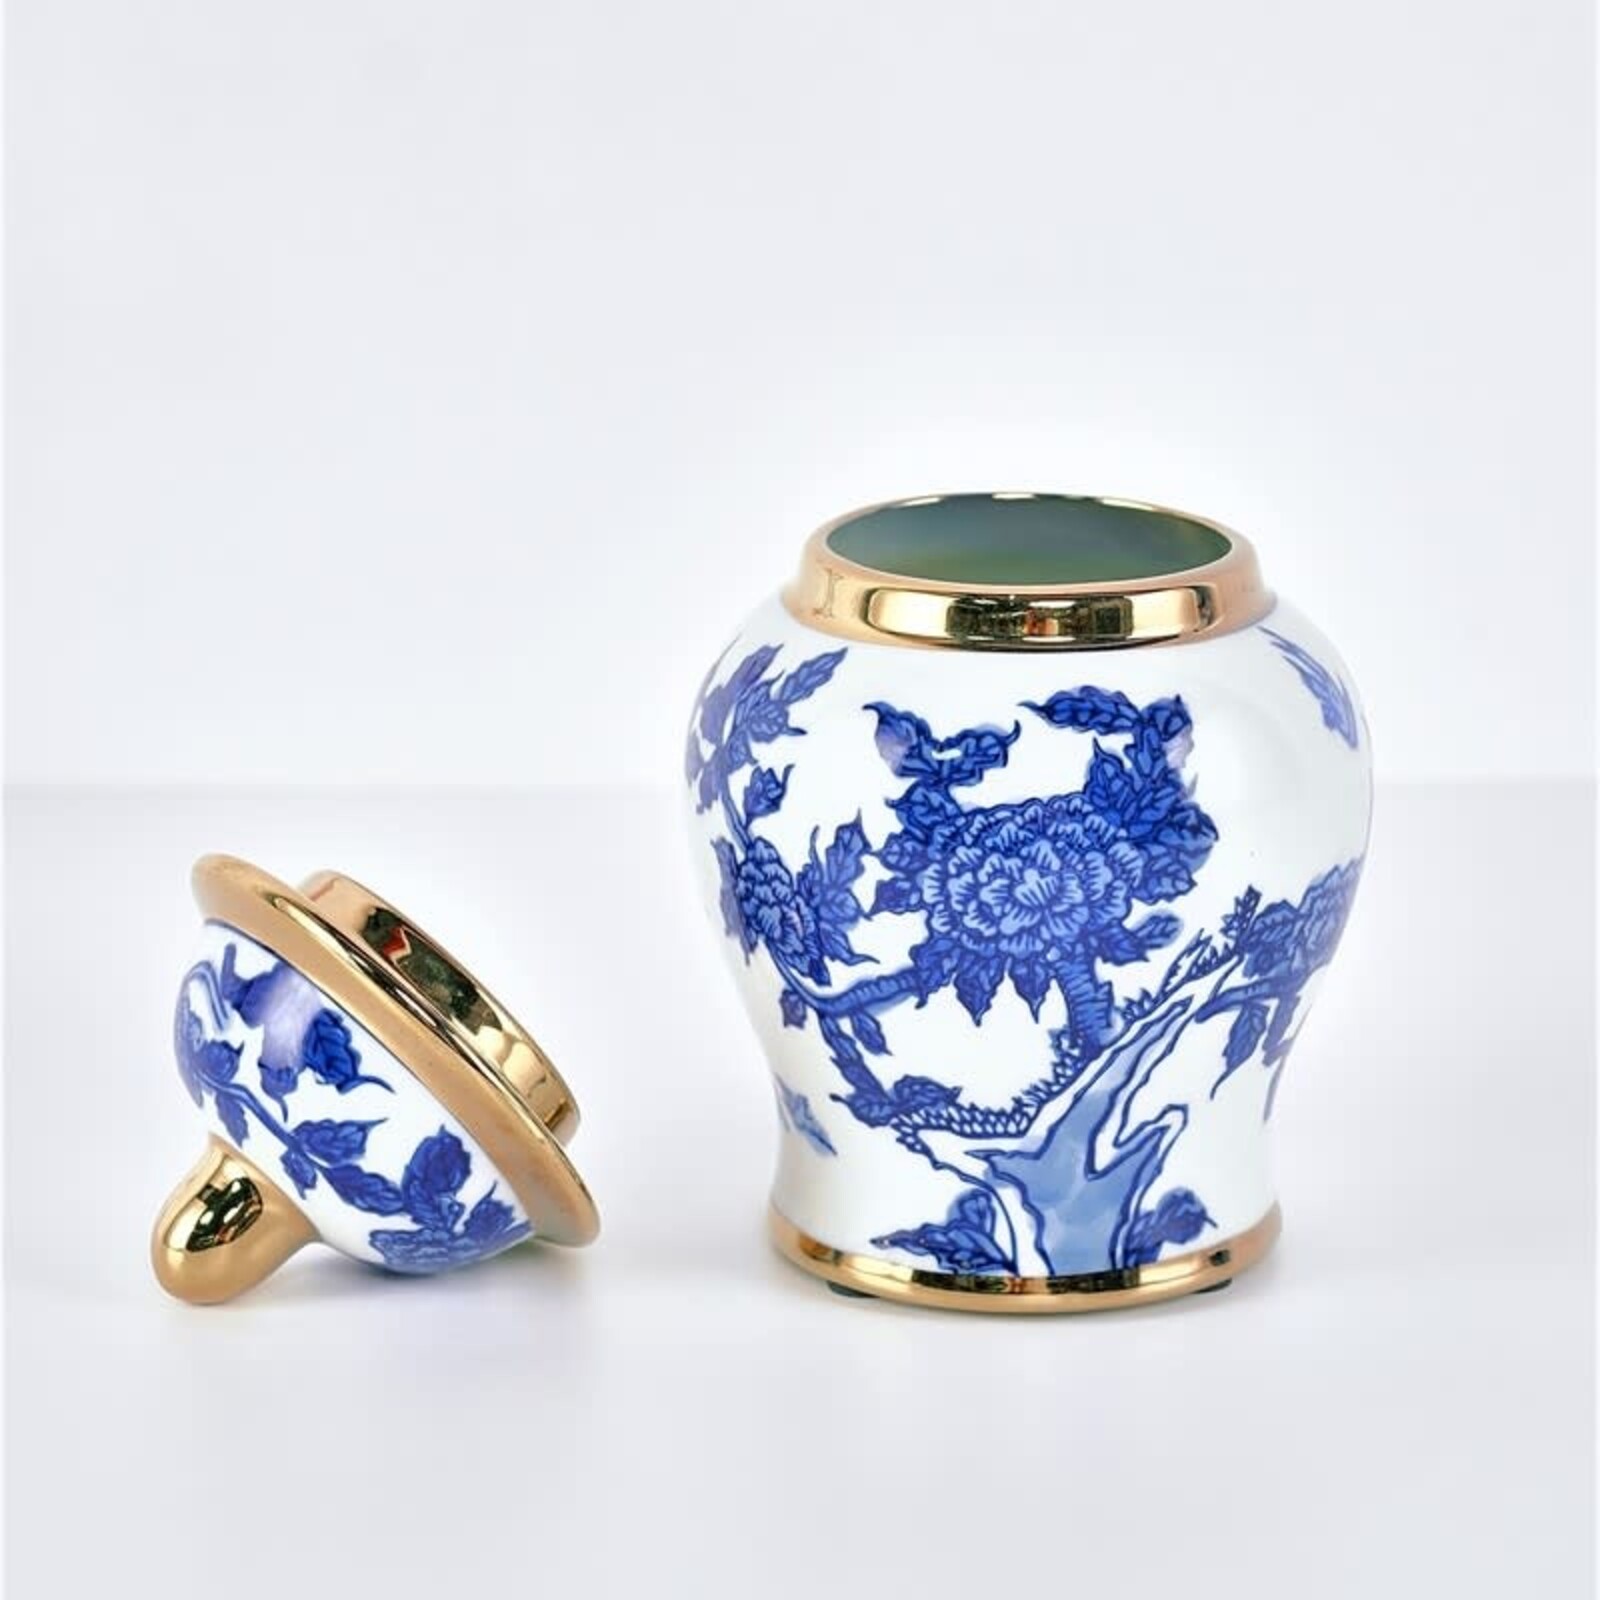 Trade Cie 6" Ceramic Blue White Ginger Jar, Gold Trim   HD6120 loading=